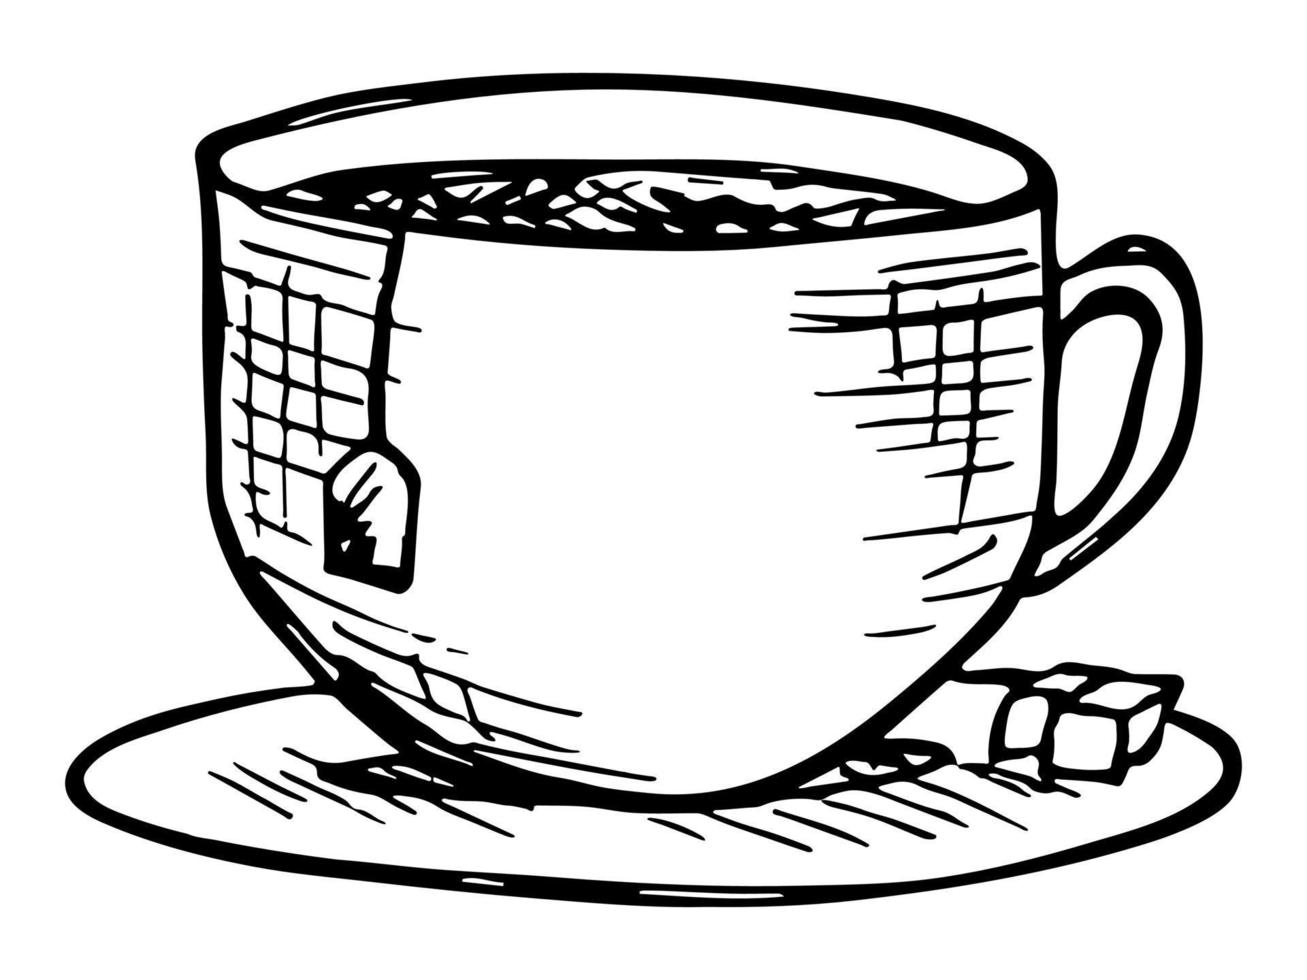 Cute cup of tea illustration. Simple mug clipart. Cozy home doodle vector